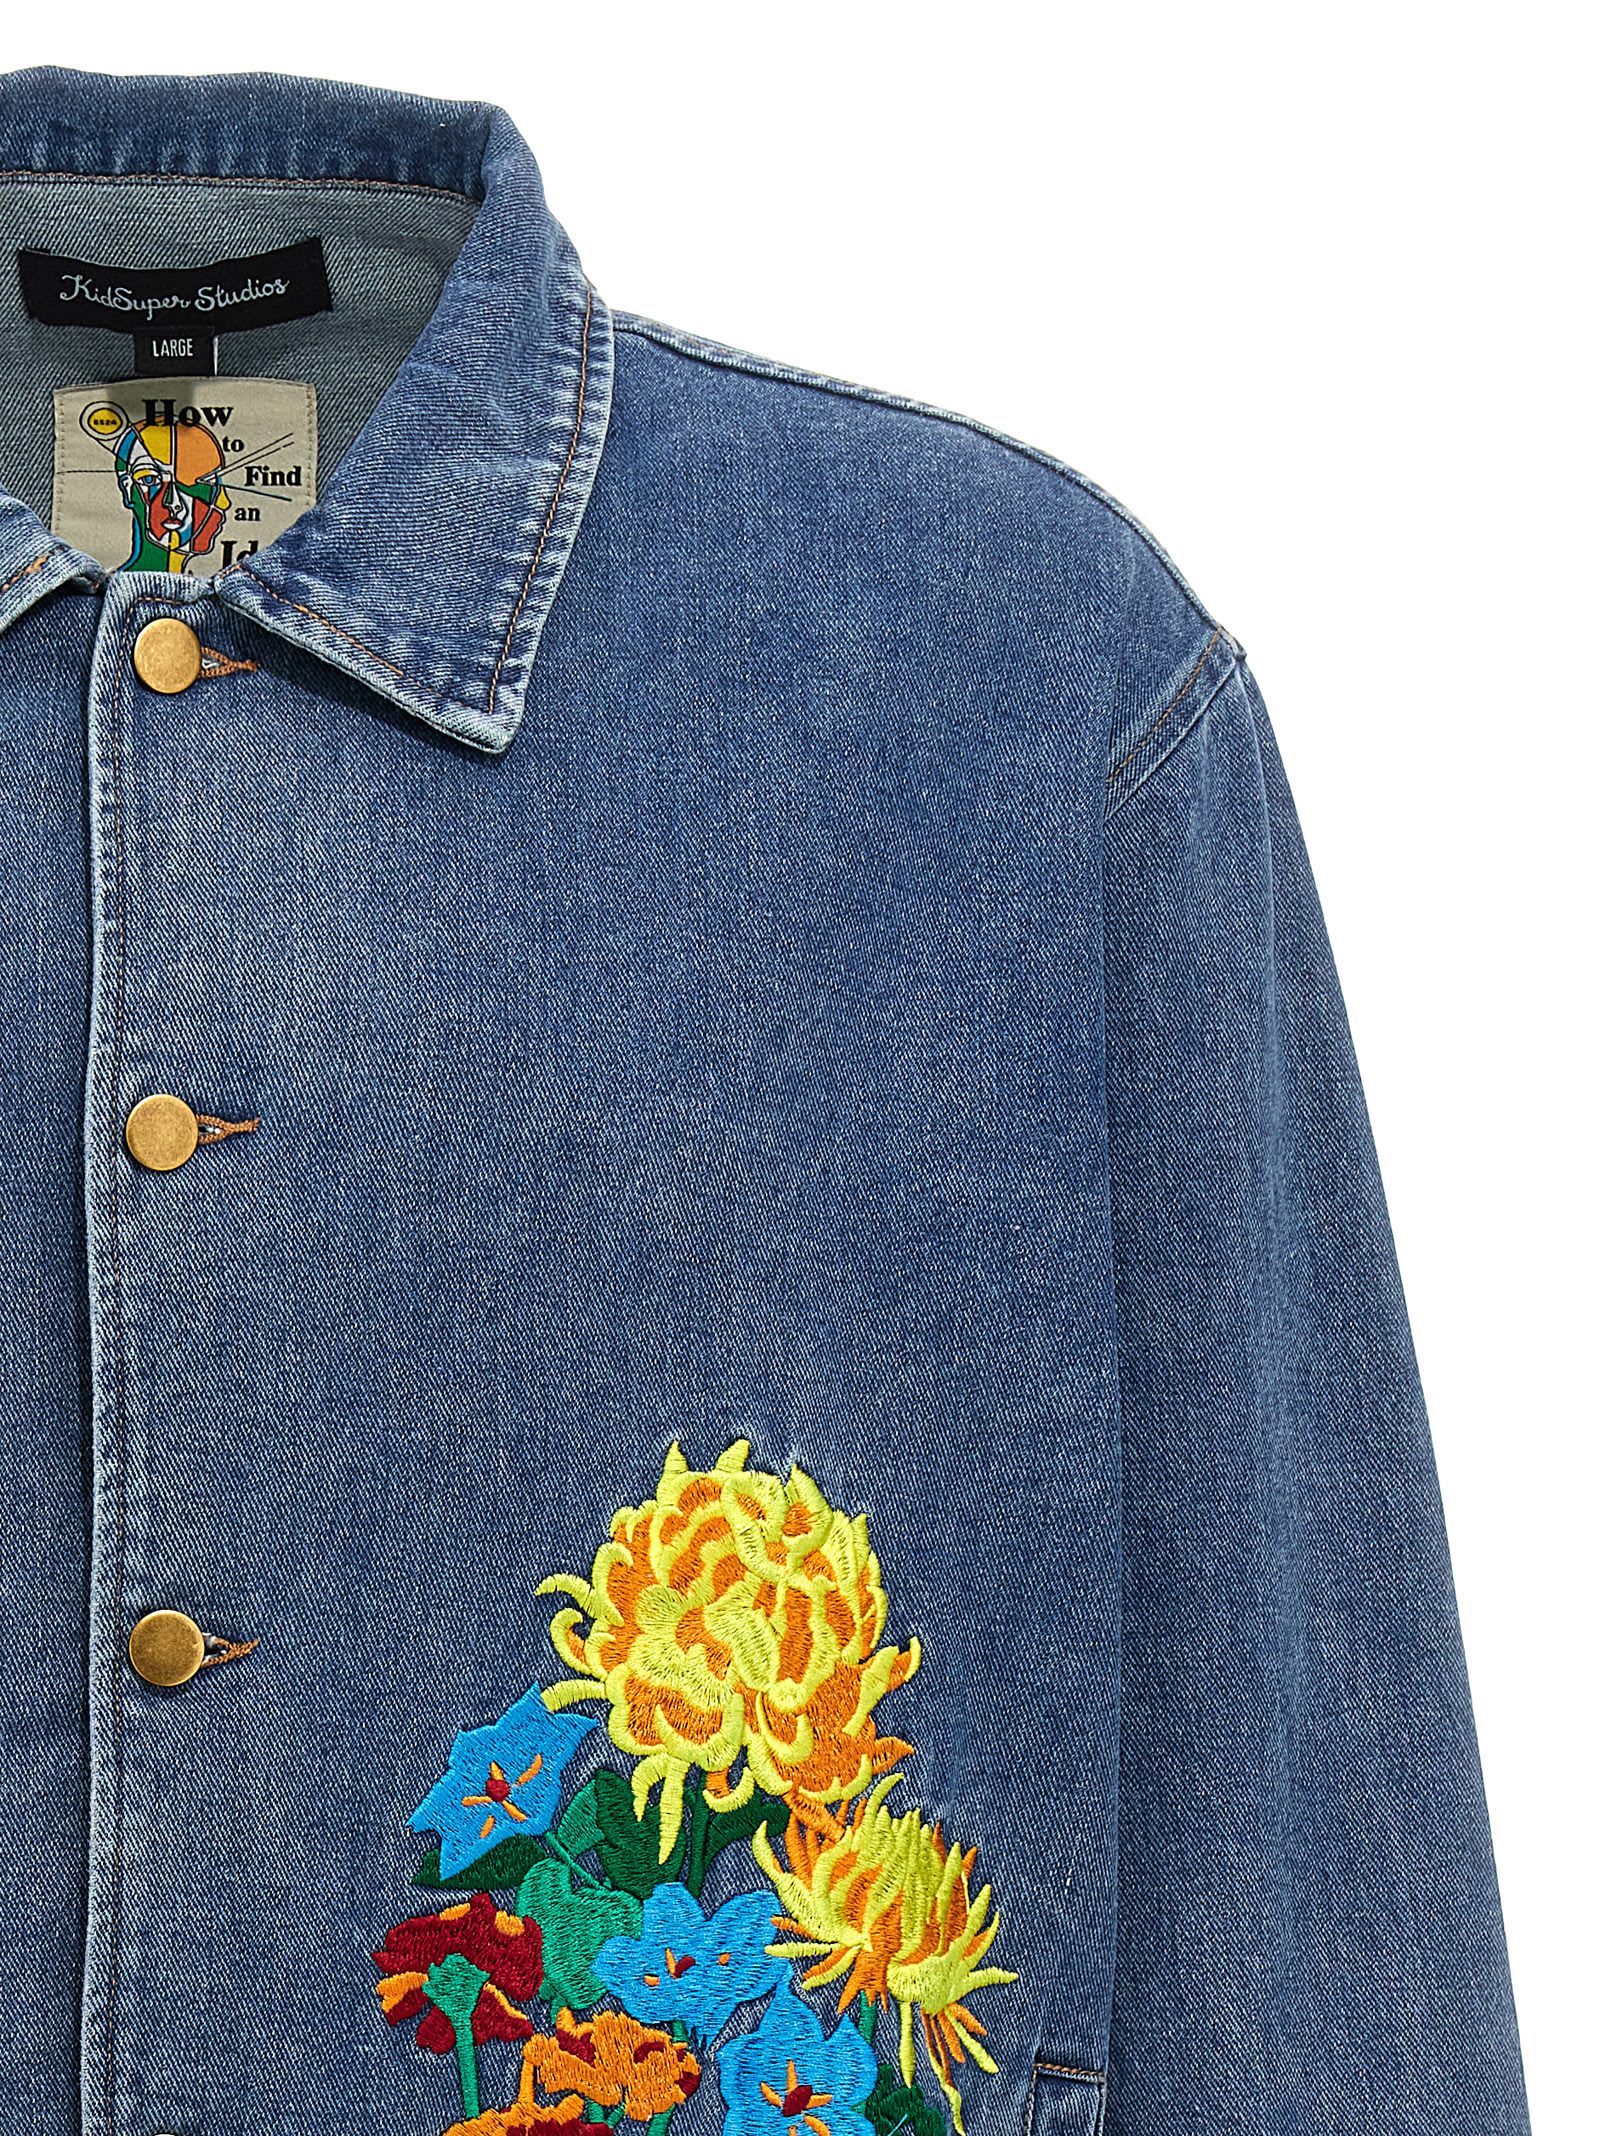 Shop Kidsuper Flower Pots Jacket In Blue